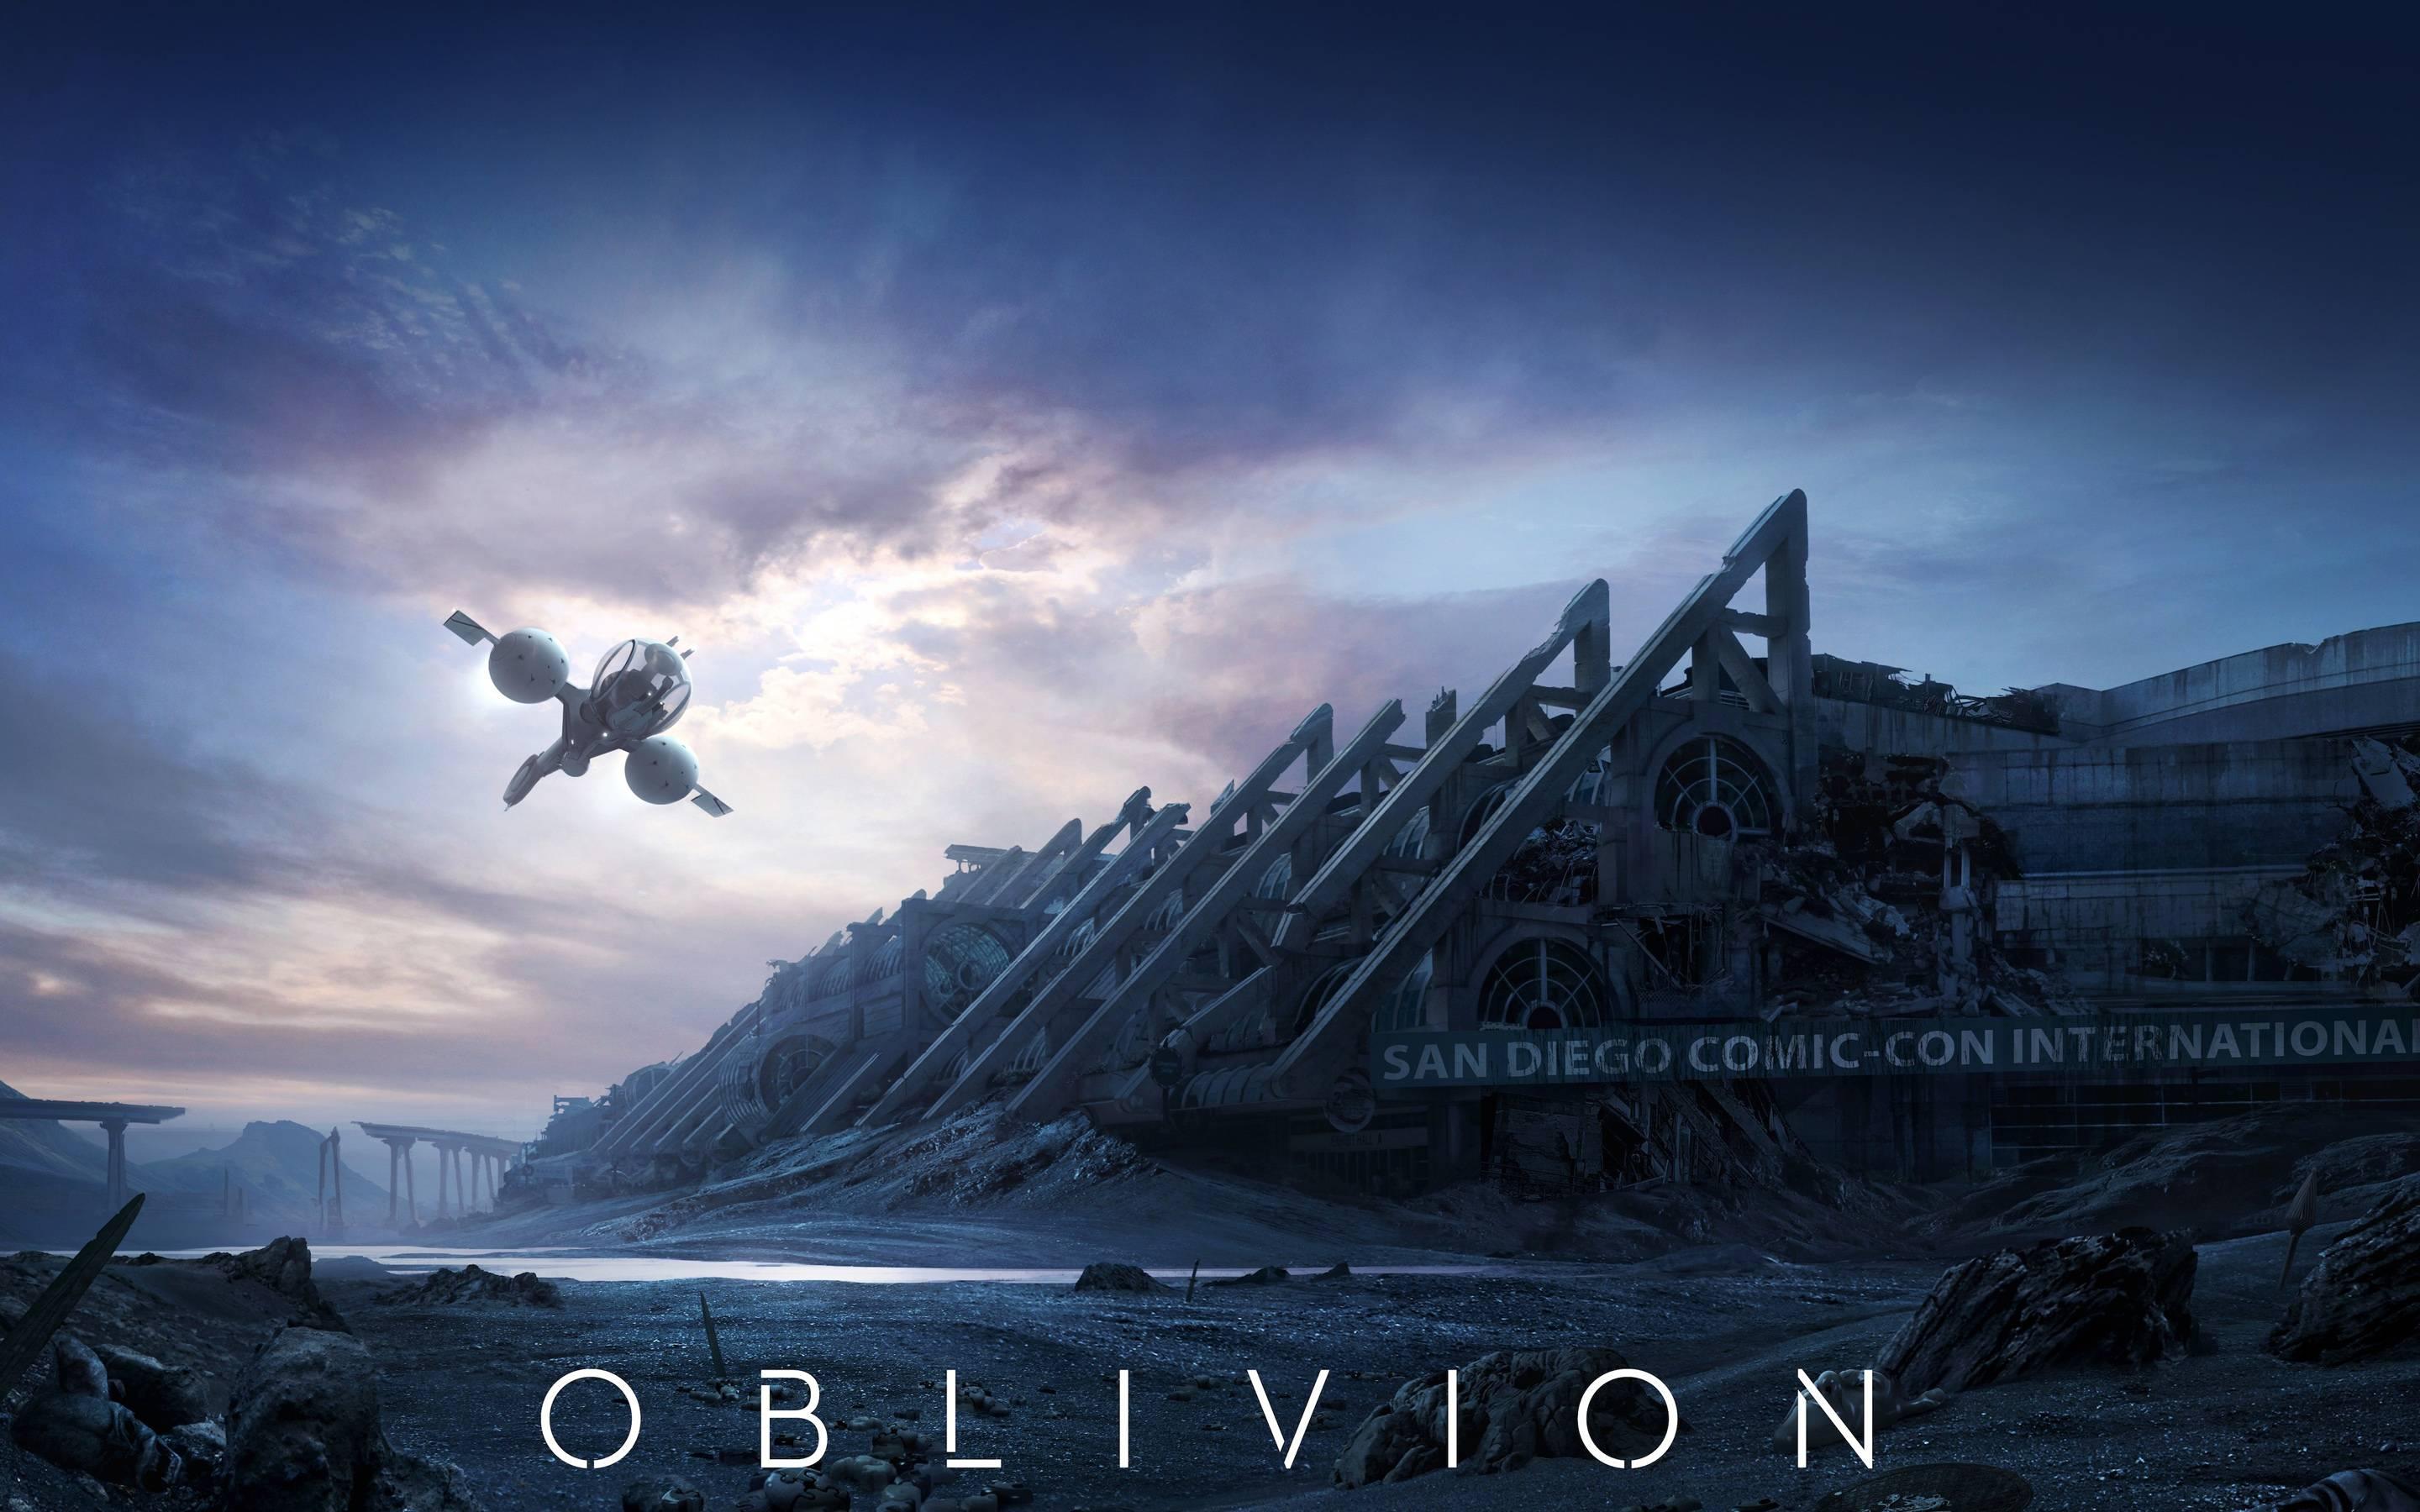 Download Oblivion Wallpaper Hd Backgrounds Download Itl Cat - oblivion roblox download